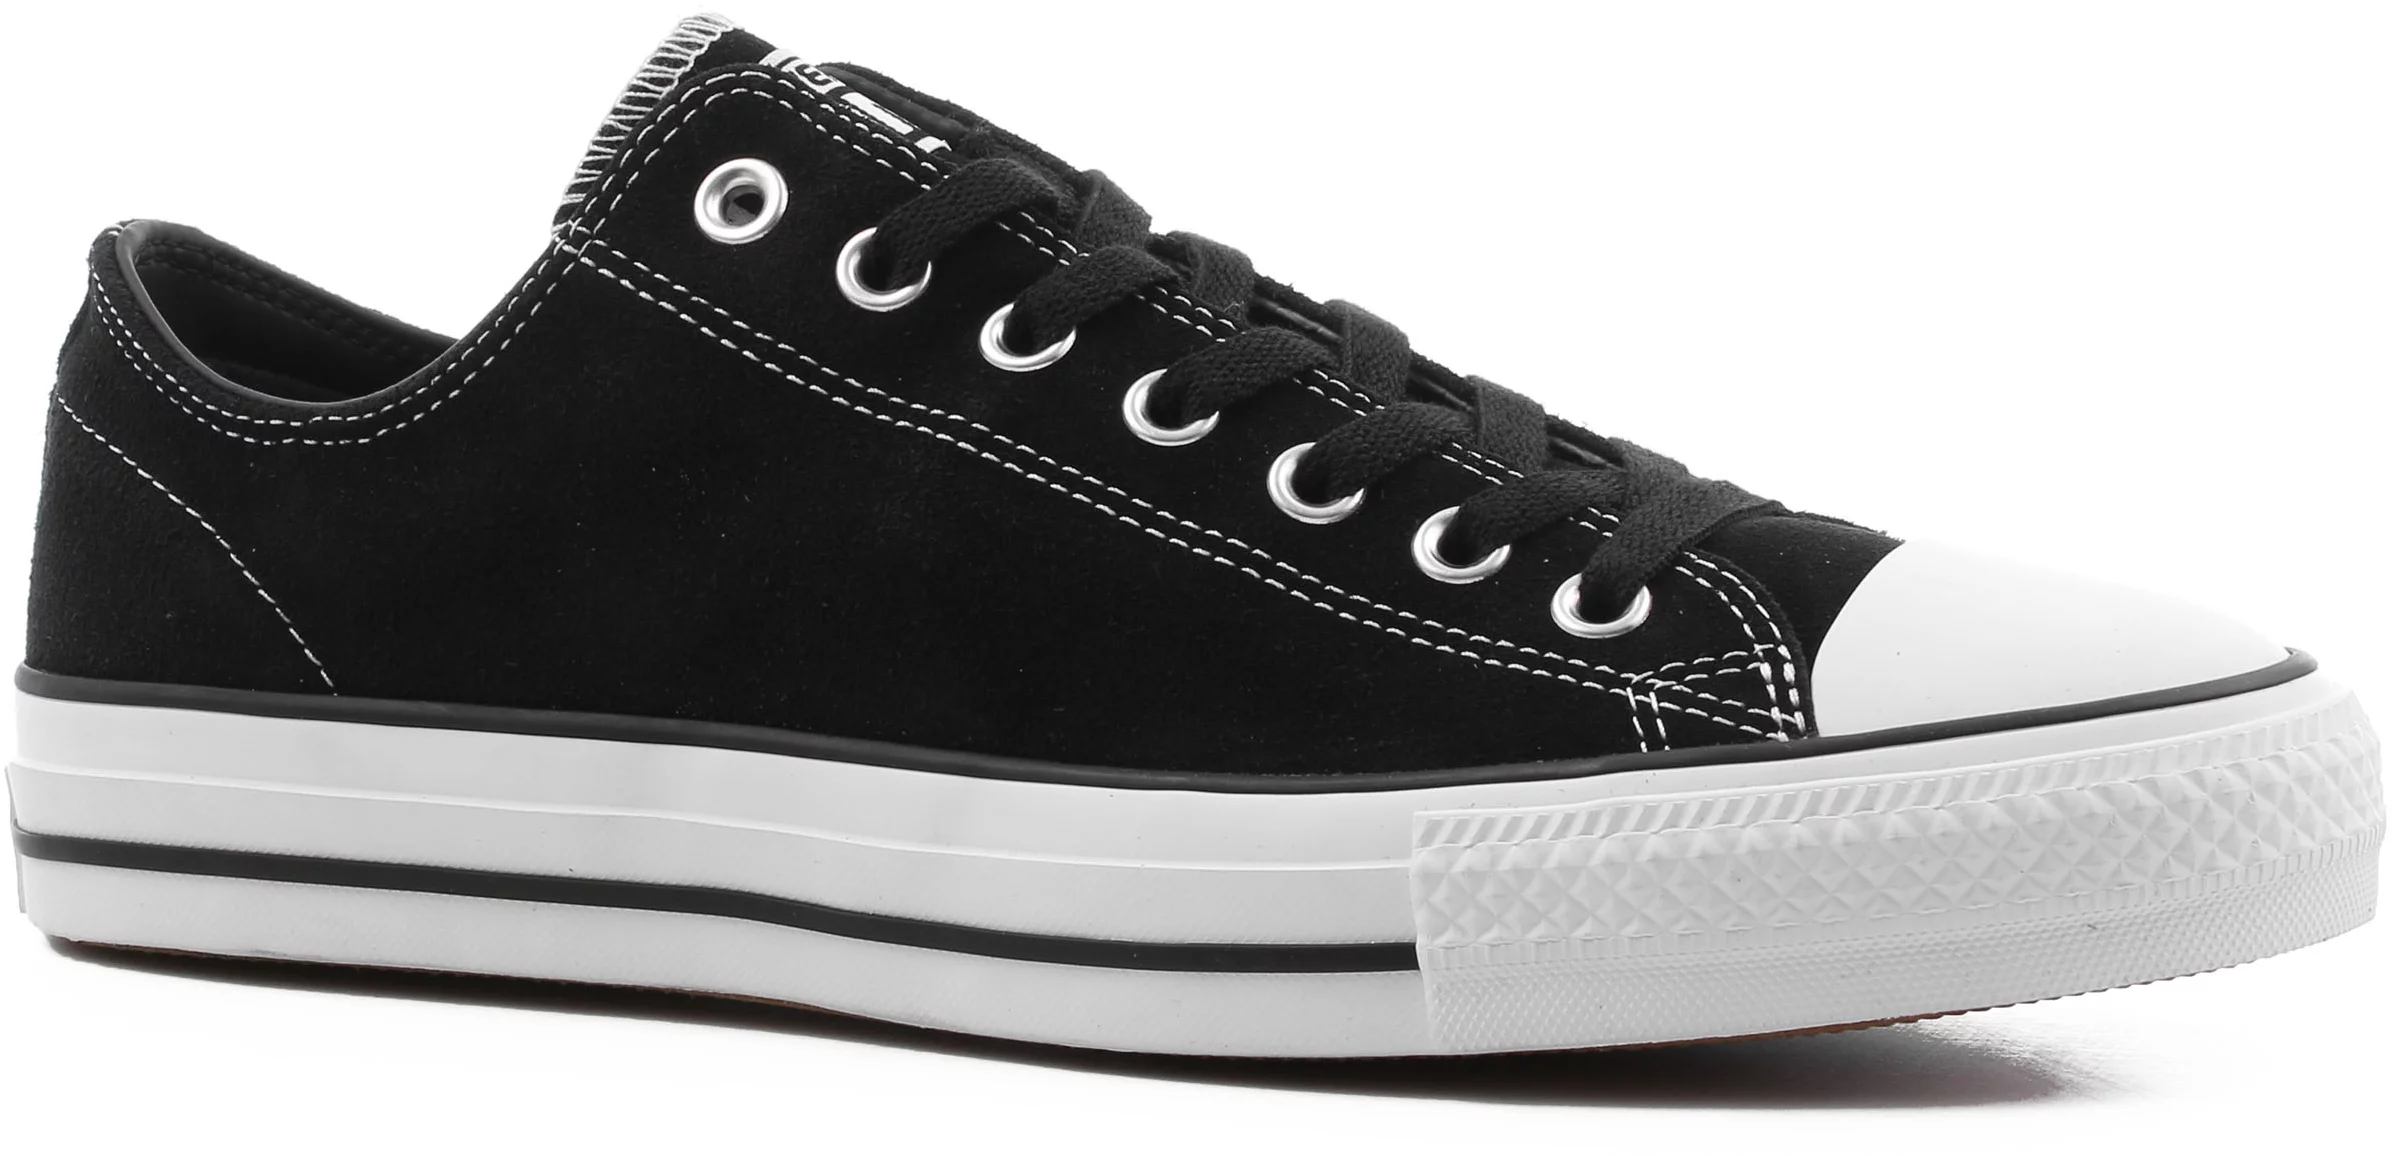 pozo los excitación Converse Chuck Taylor All Star Pro Skate Shoes - (suede) black/black/white  - Free Shipping | Tactics